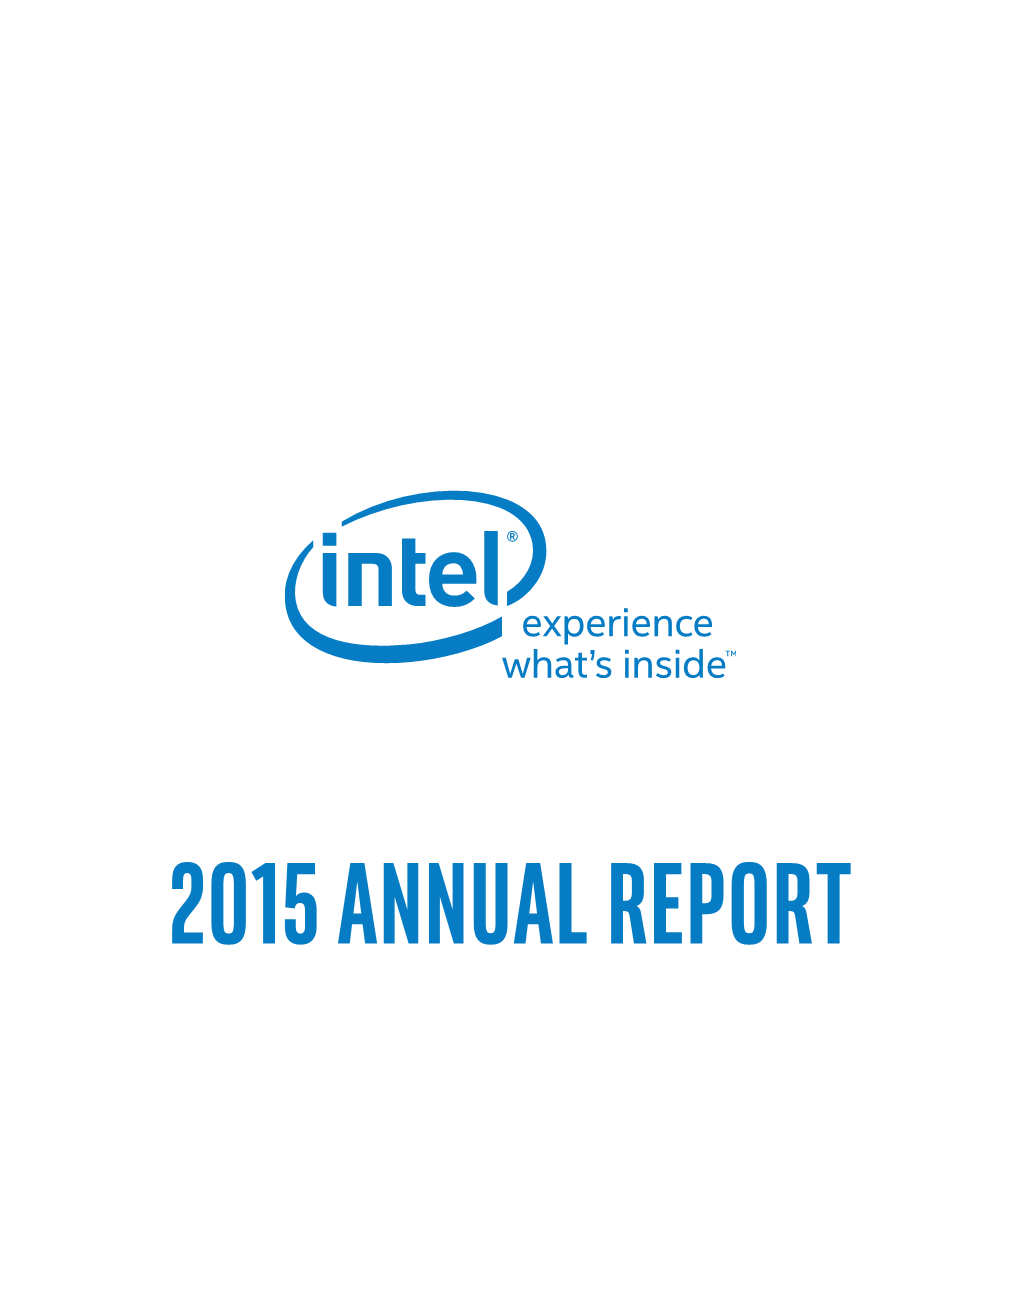 Intel 2015 Annual Report